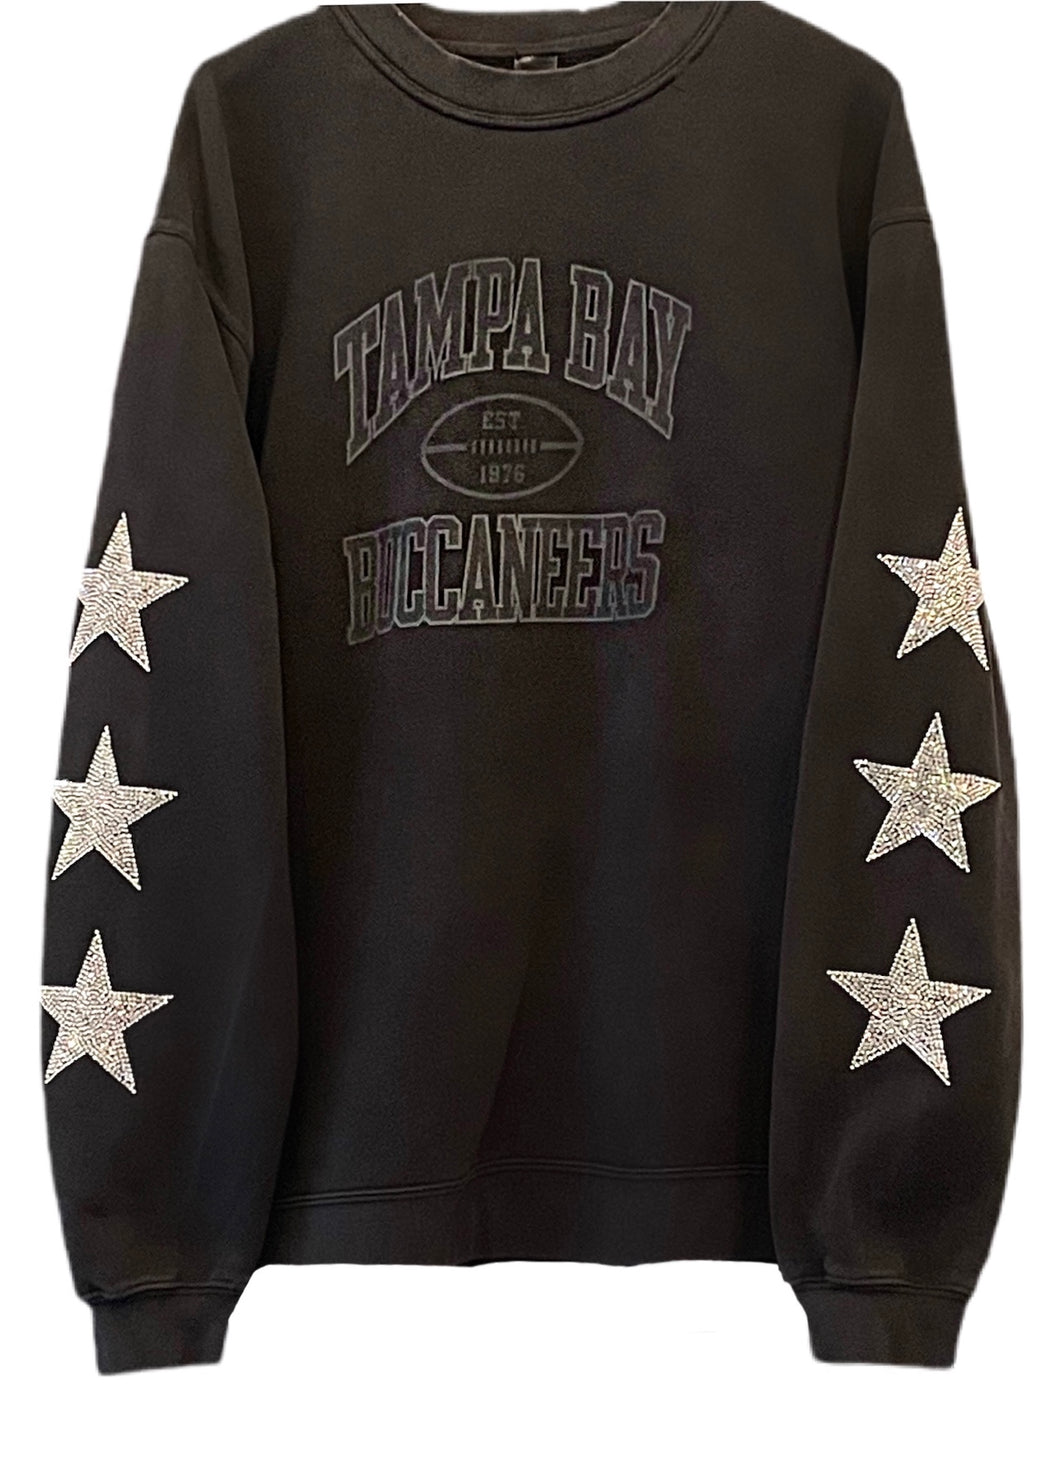 Tampa Bay Buccaneers, NFL One of a KIND Vintage Sweatshirt with Three Crystal Star Design with Custom Crystal Name & #